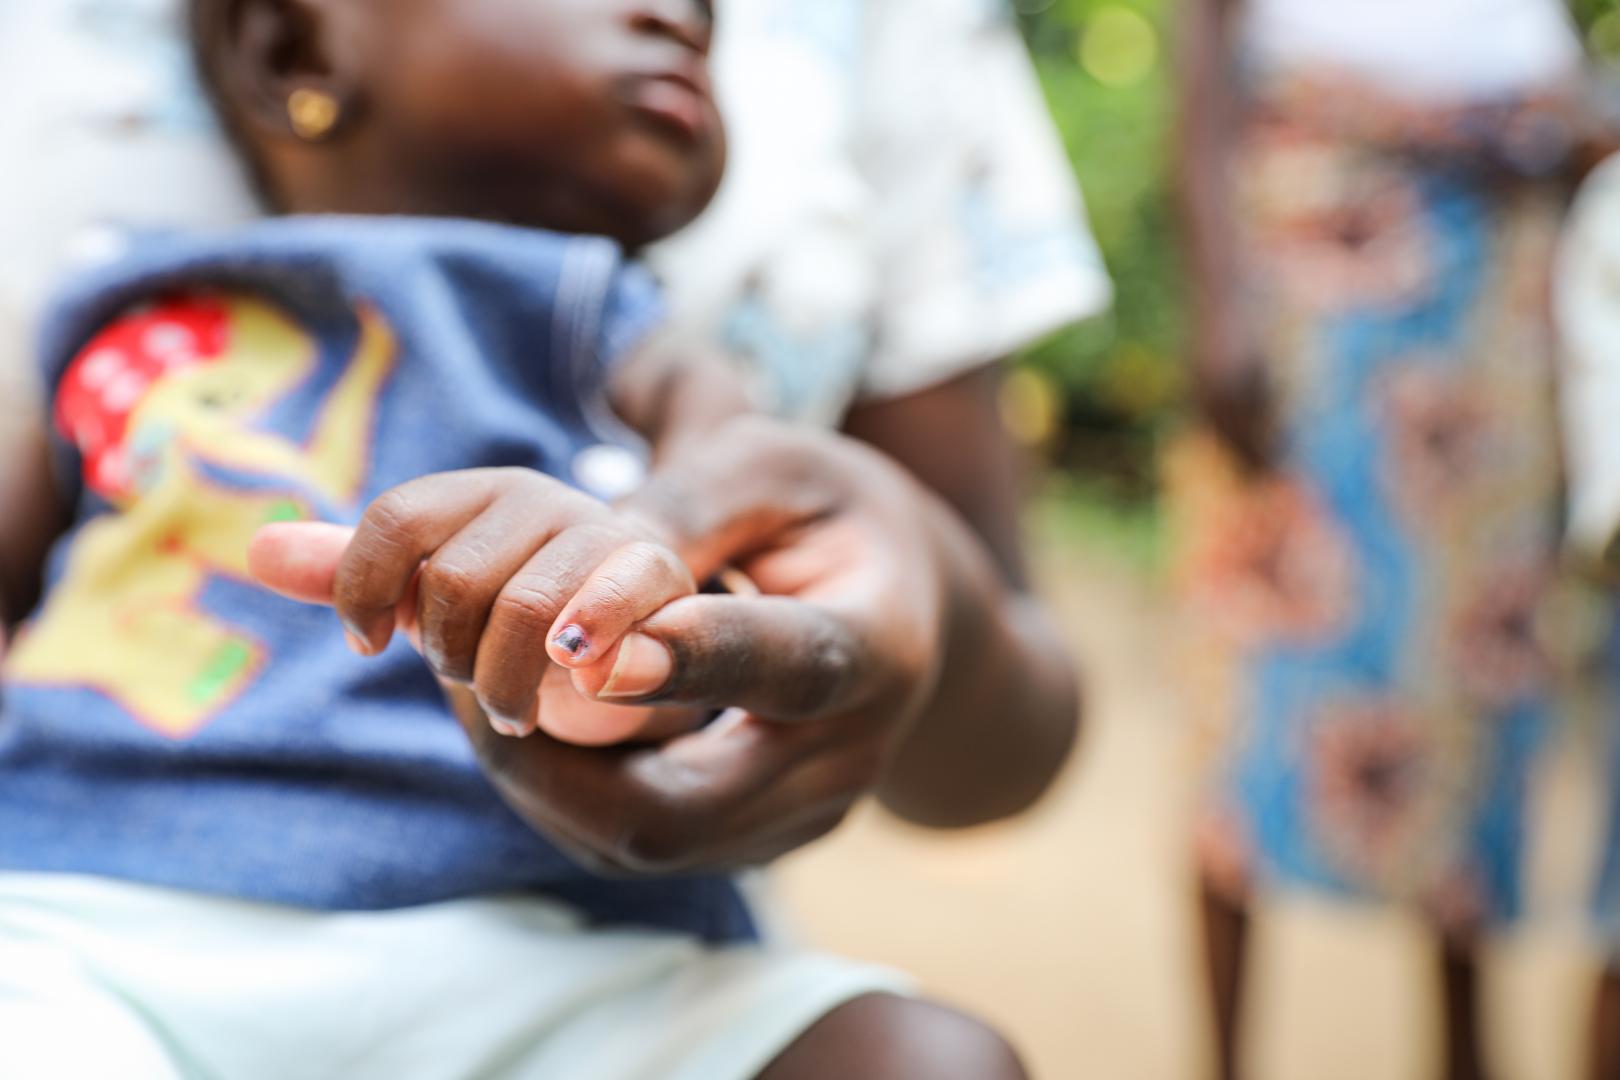 Malawi intensifies response after wild poliovirus detected